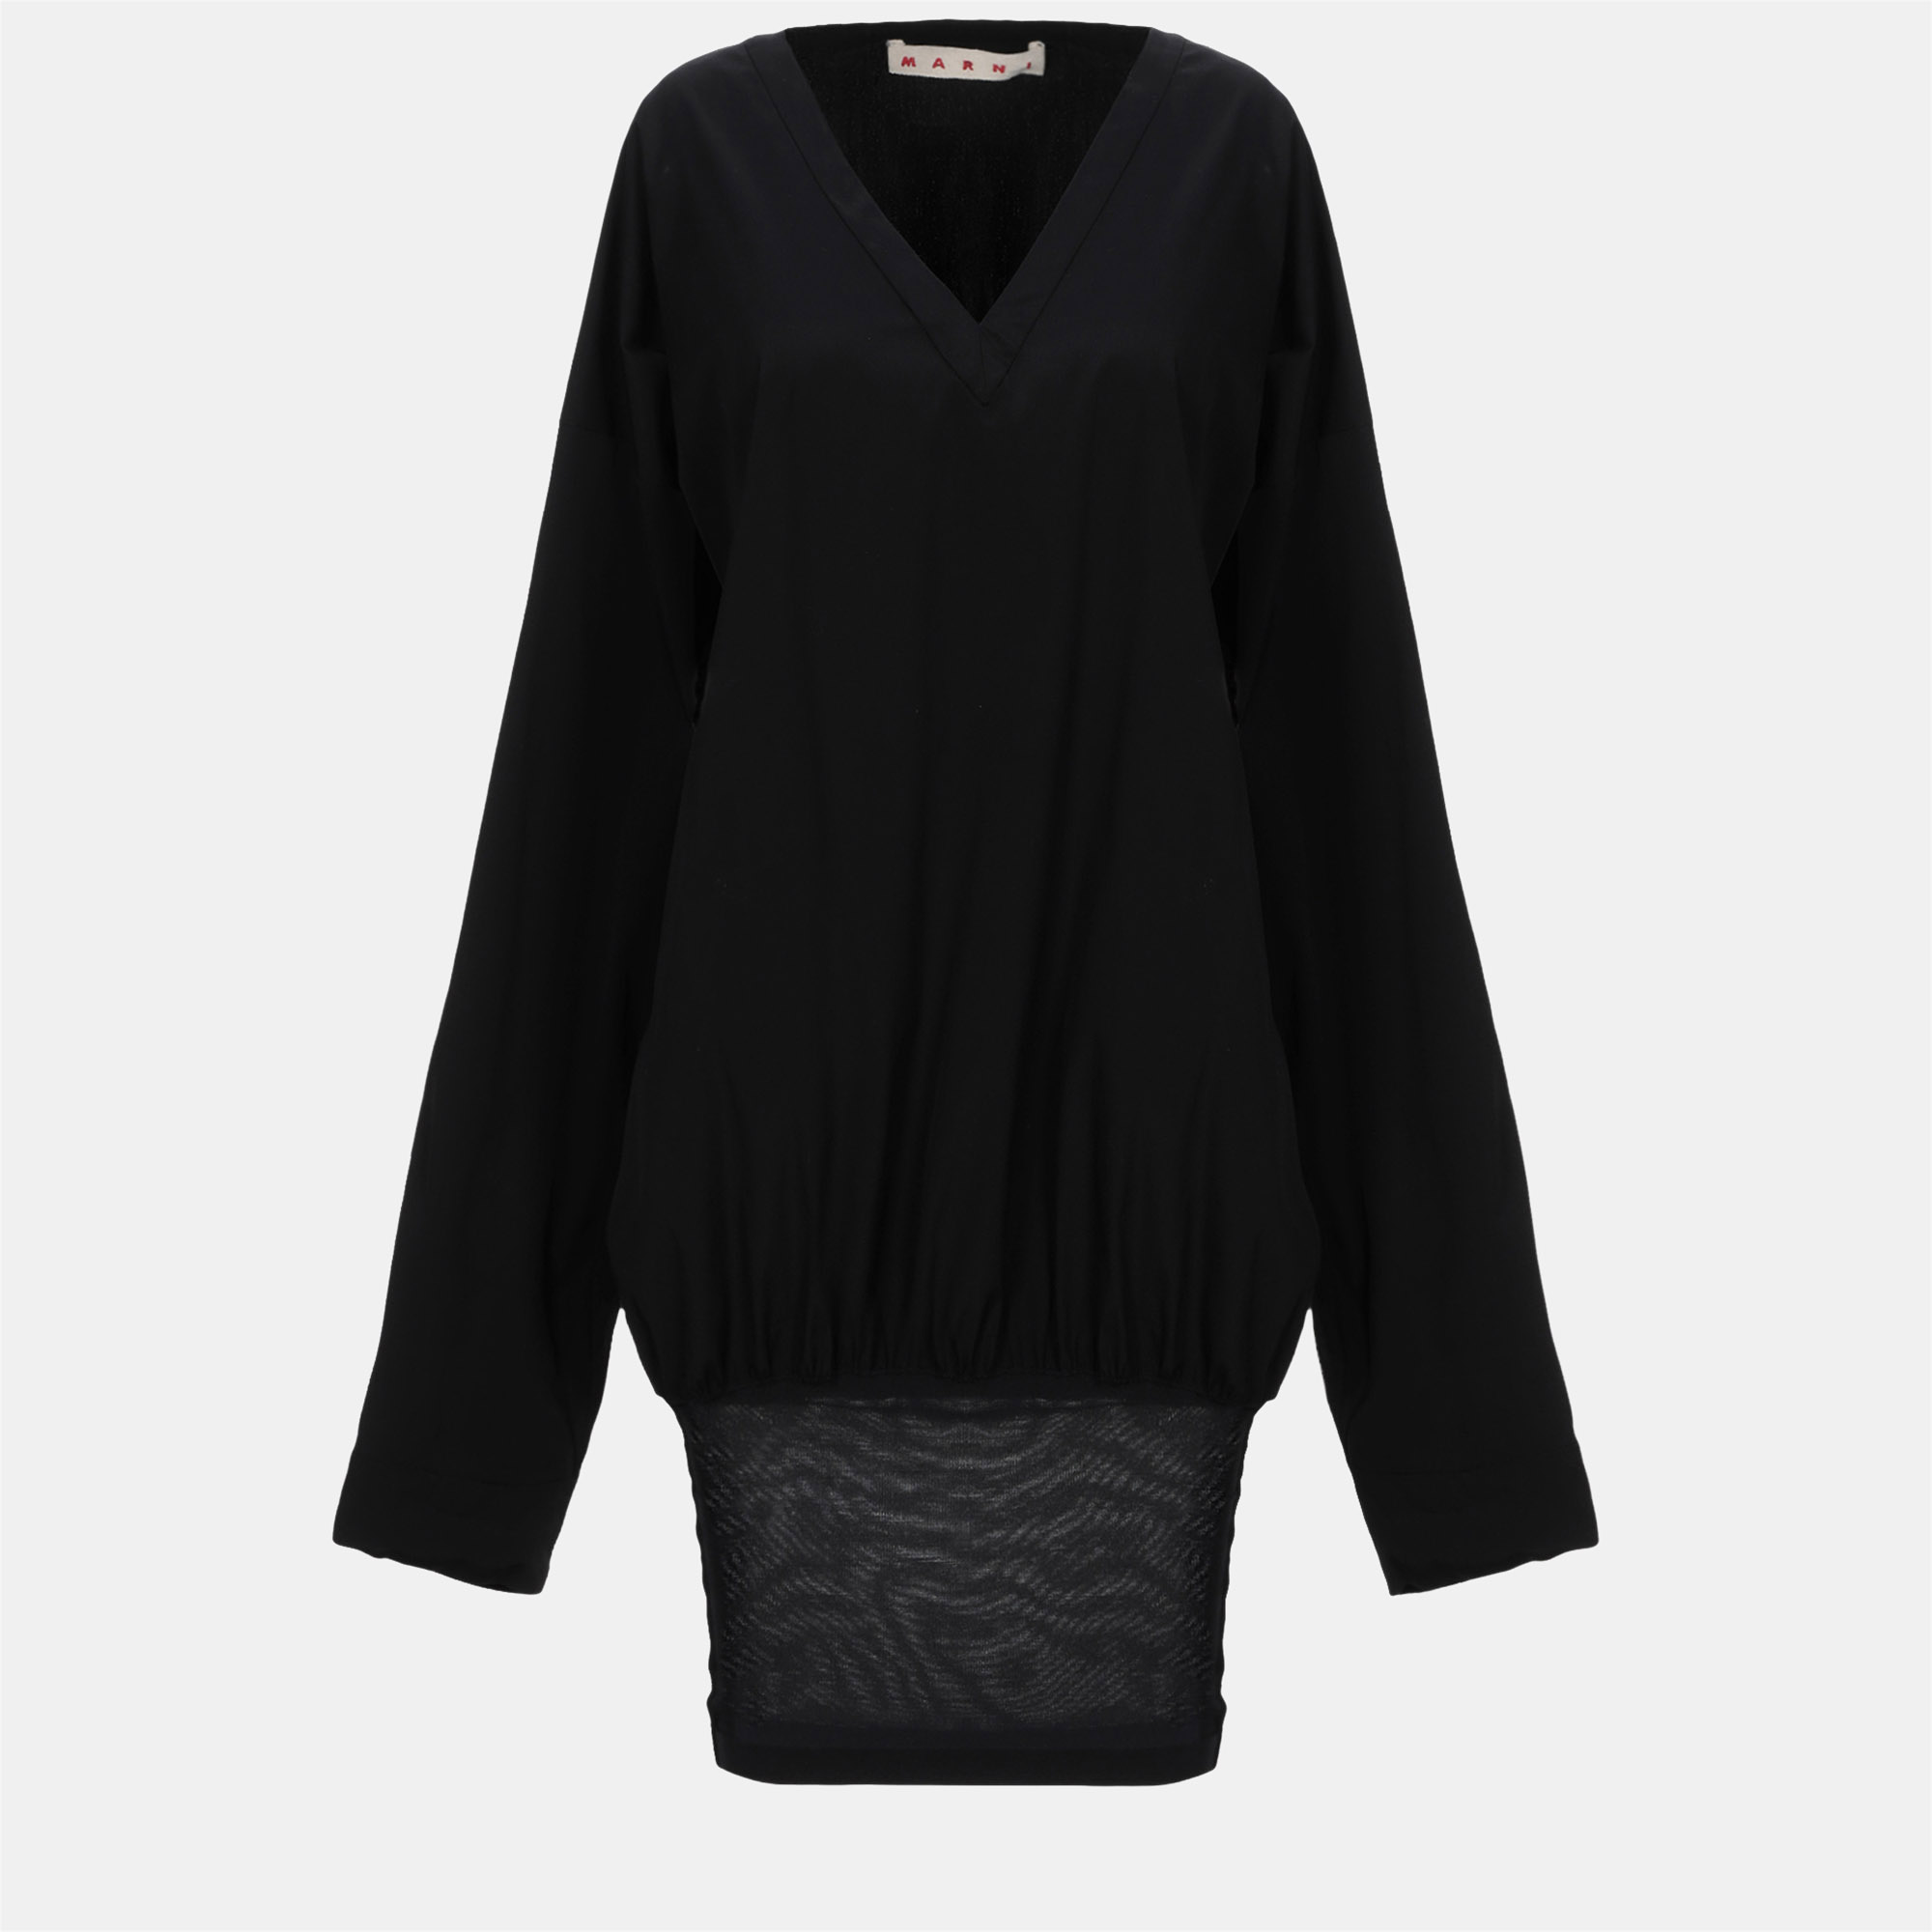 Marni black cotton & knit long sleeve blouse m (it 42)